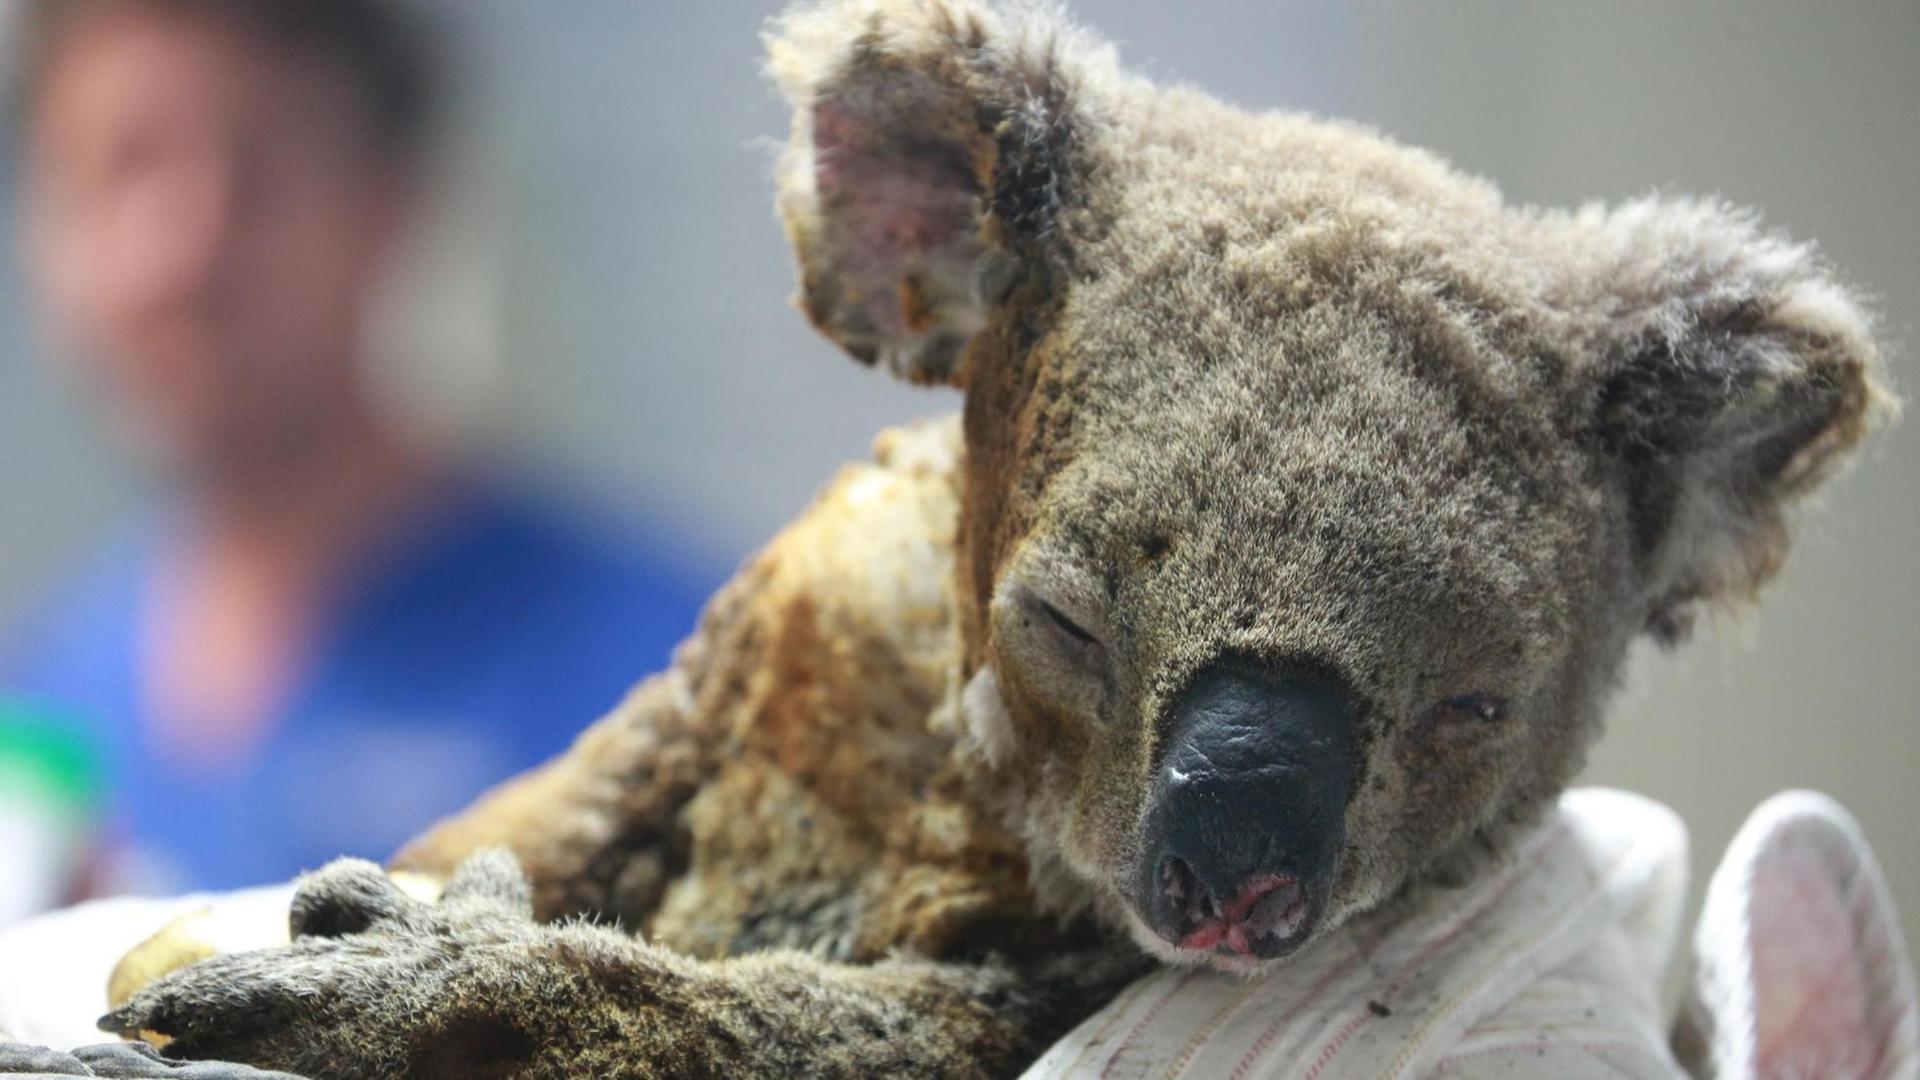 PORT MACQUARIE, AUSTRALIA - NOVEMBER 19: An injured koala receives treatment after its rescue from a bushfire at the Port Macquarie Koala Hospital on November 19, 2019 in Port Macquarie, Australia. PUBLICATIONxINxGERxSUIxAUTxHUNxONLY Copyright: xVCGx CFP111259953695